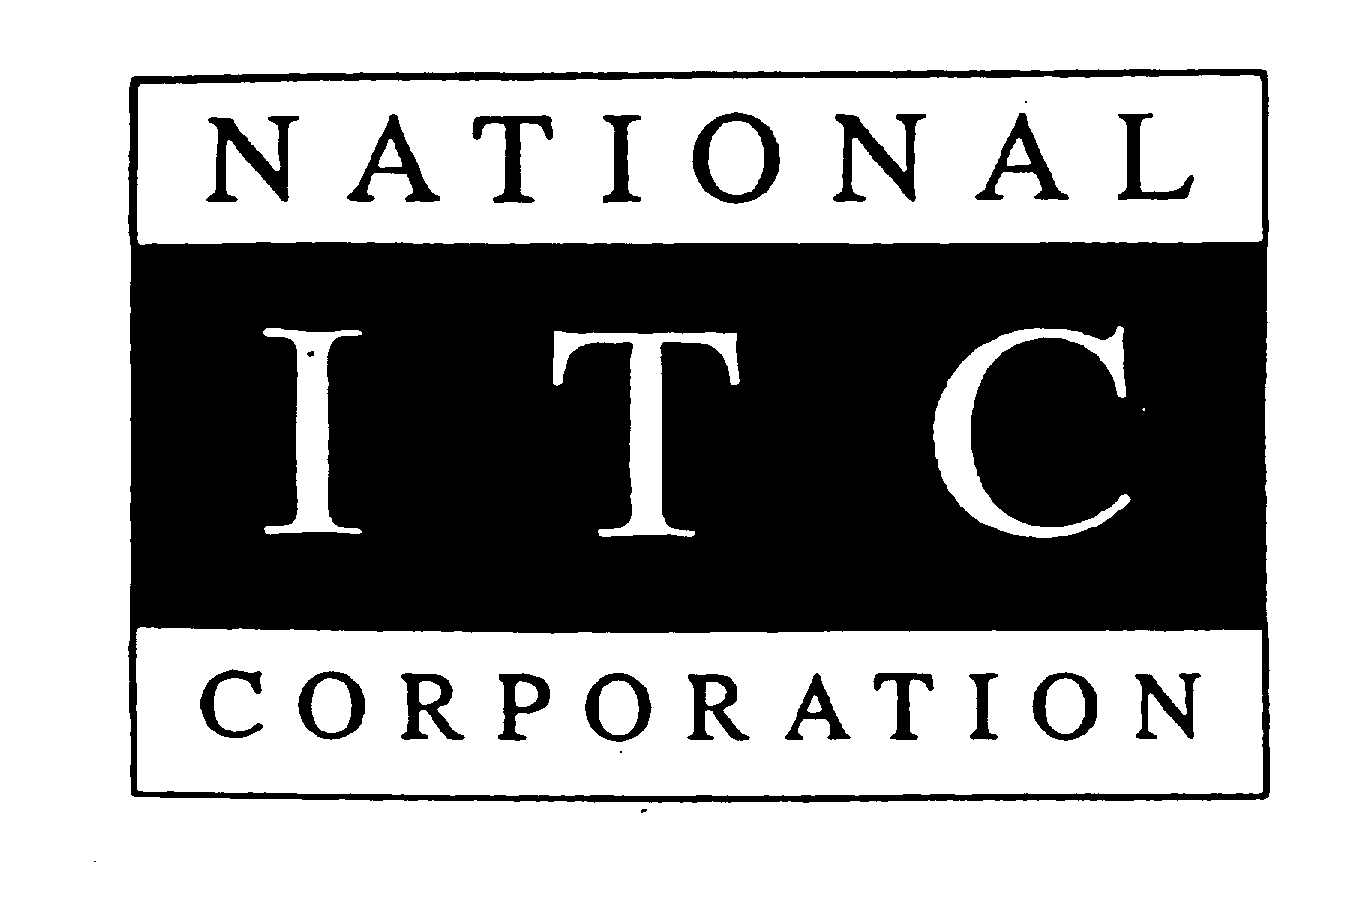  NATIONAL ITC CORPORATION